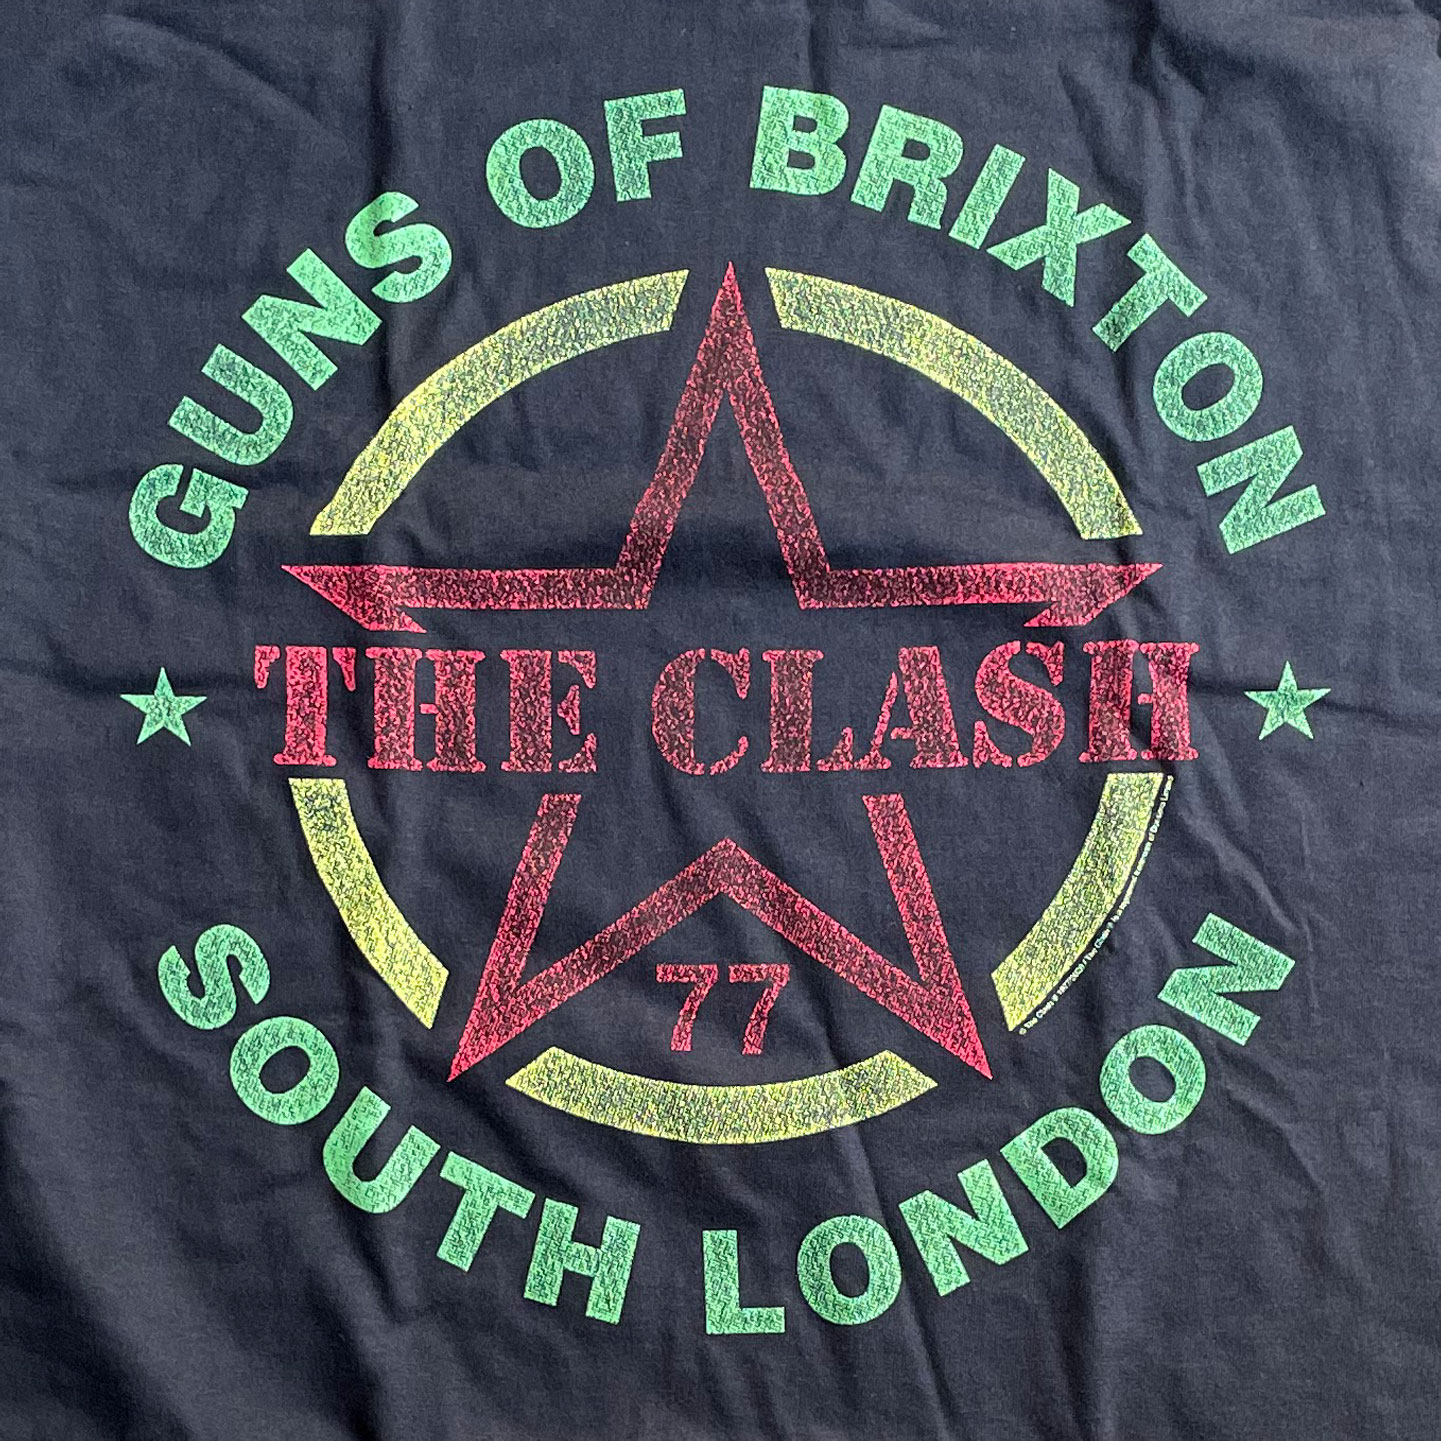 THE CLASH Tシャツ GUNS OF BRIXTON